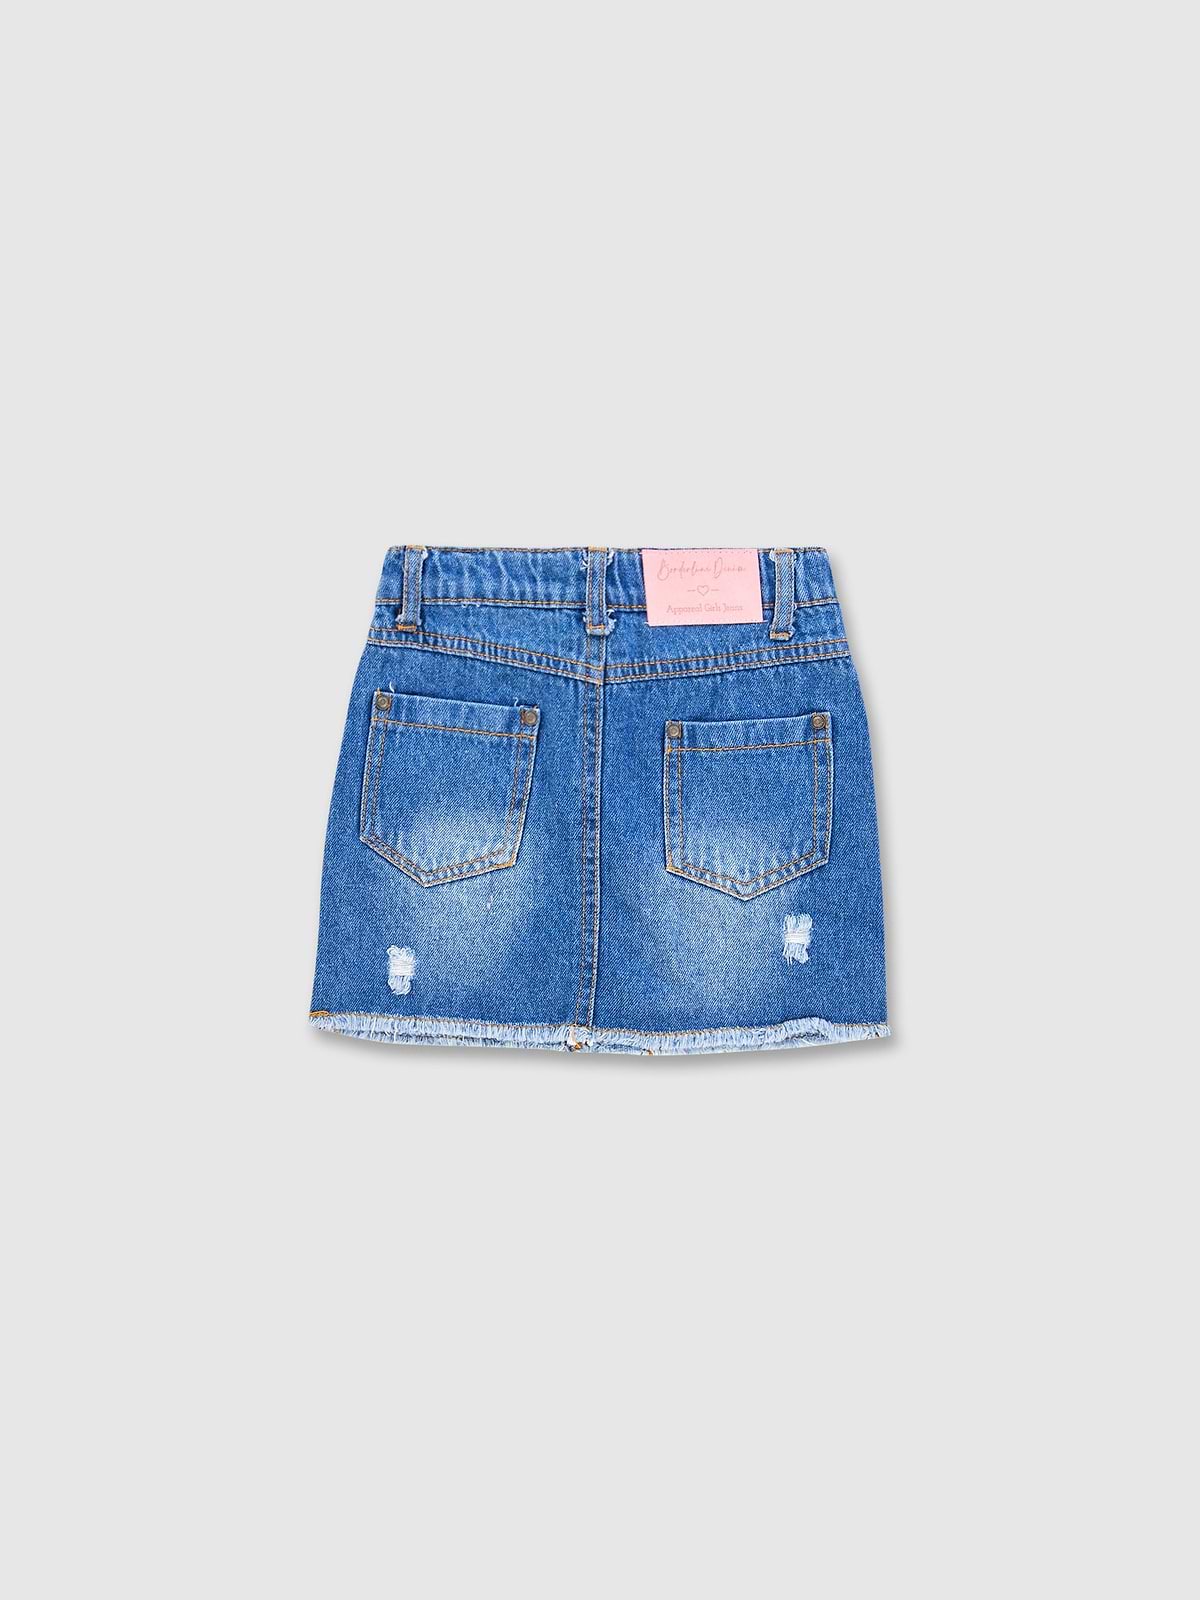 חצאית מיני ג'ינס / ילדות